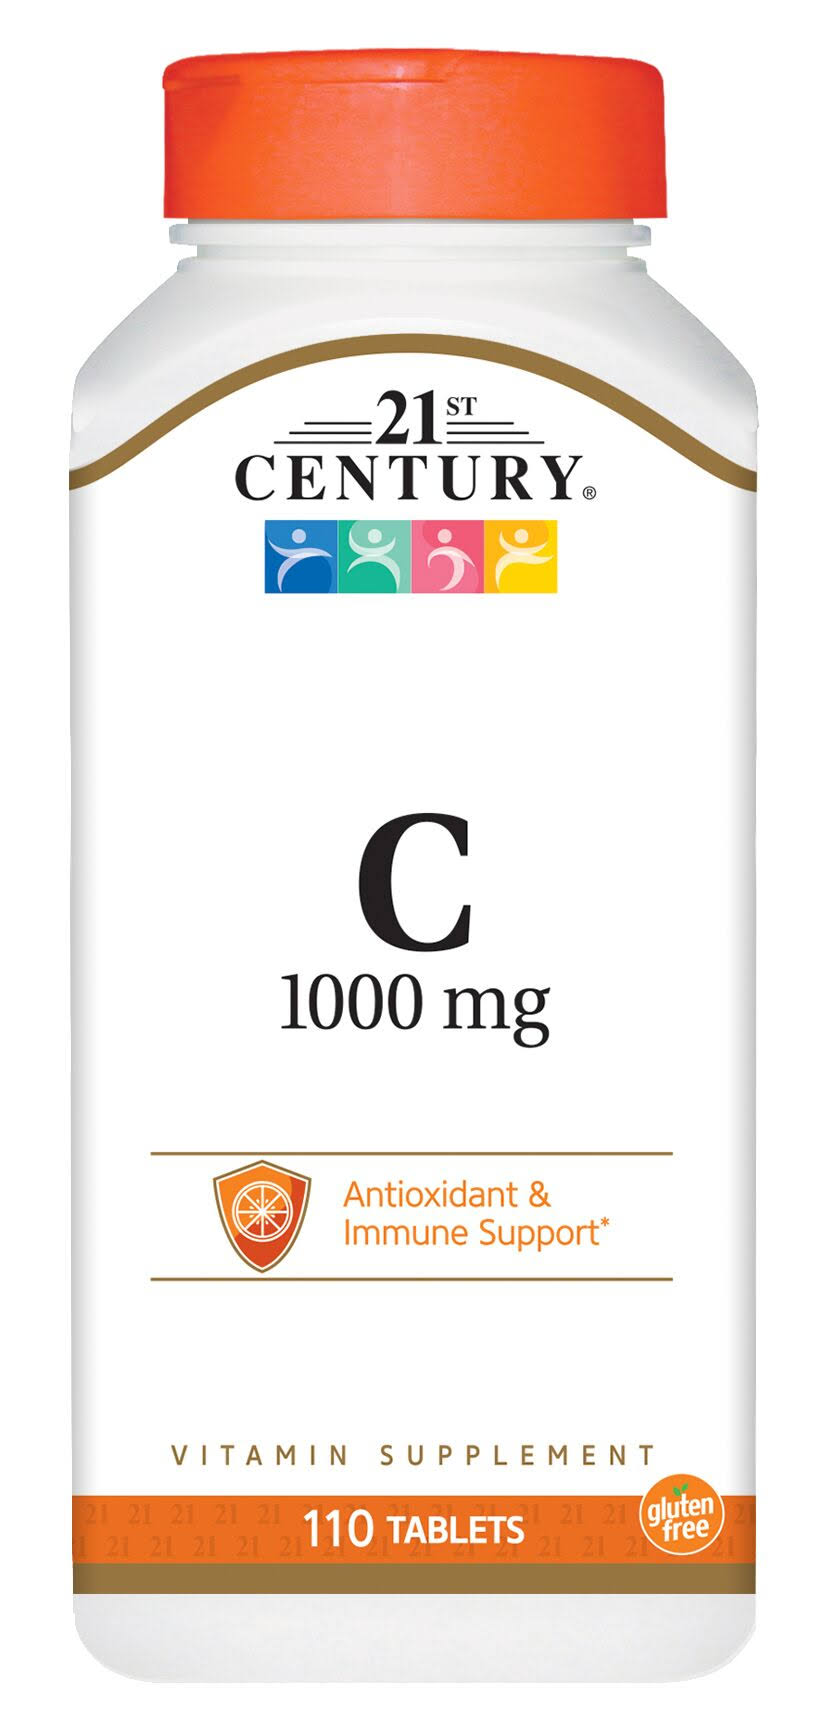 21st Century Health Care C1000 Vitamin Supplement - 110 Tablets